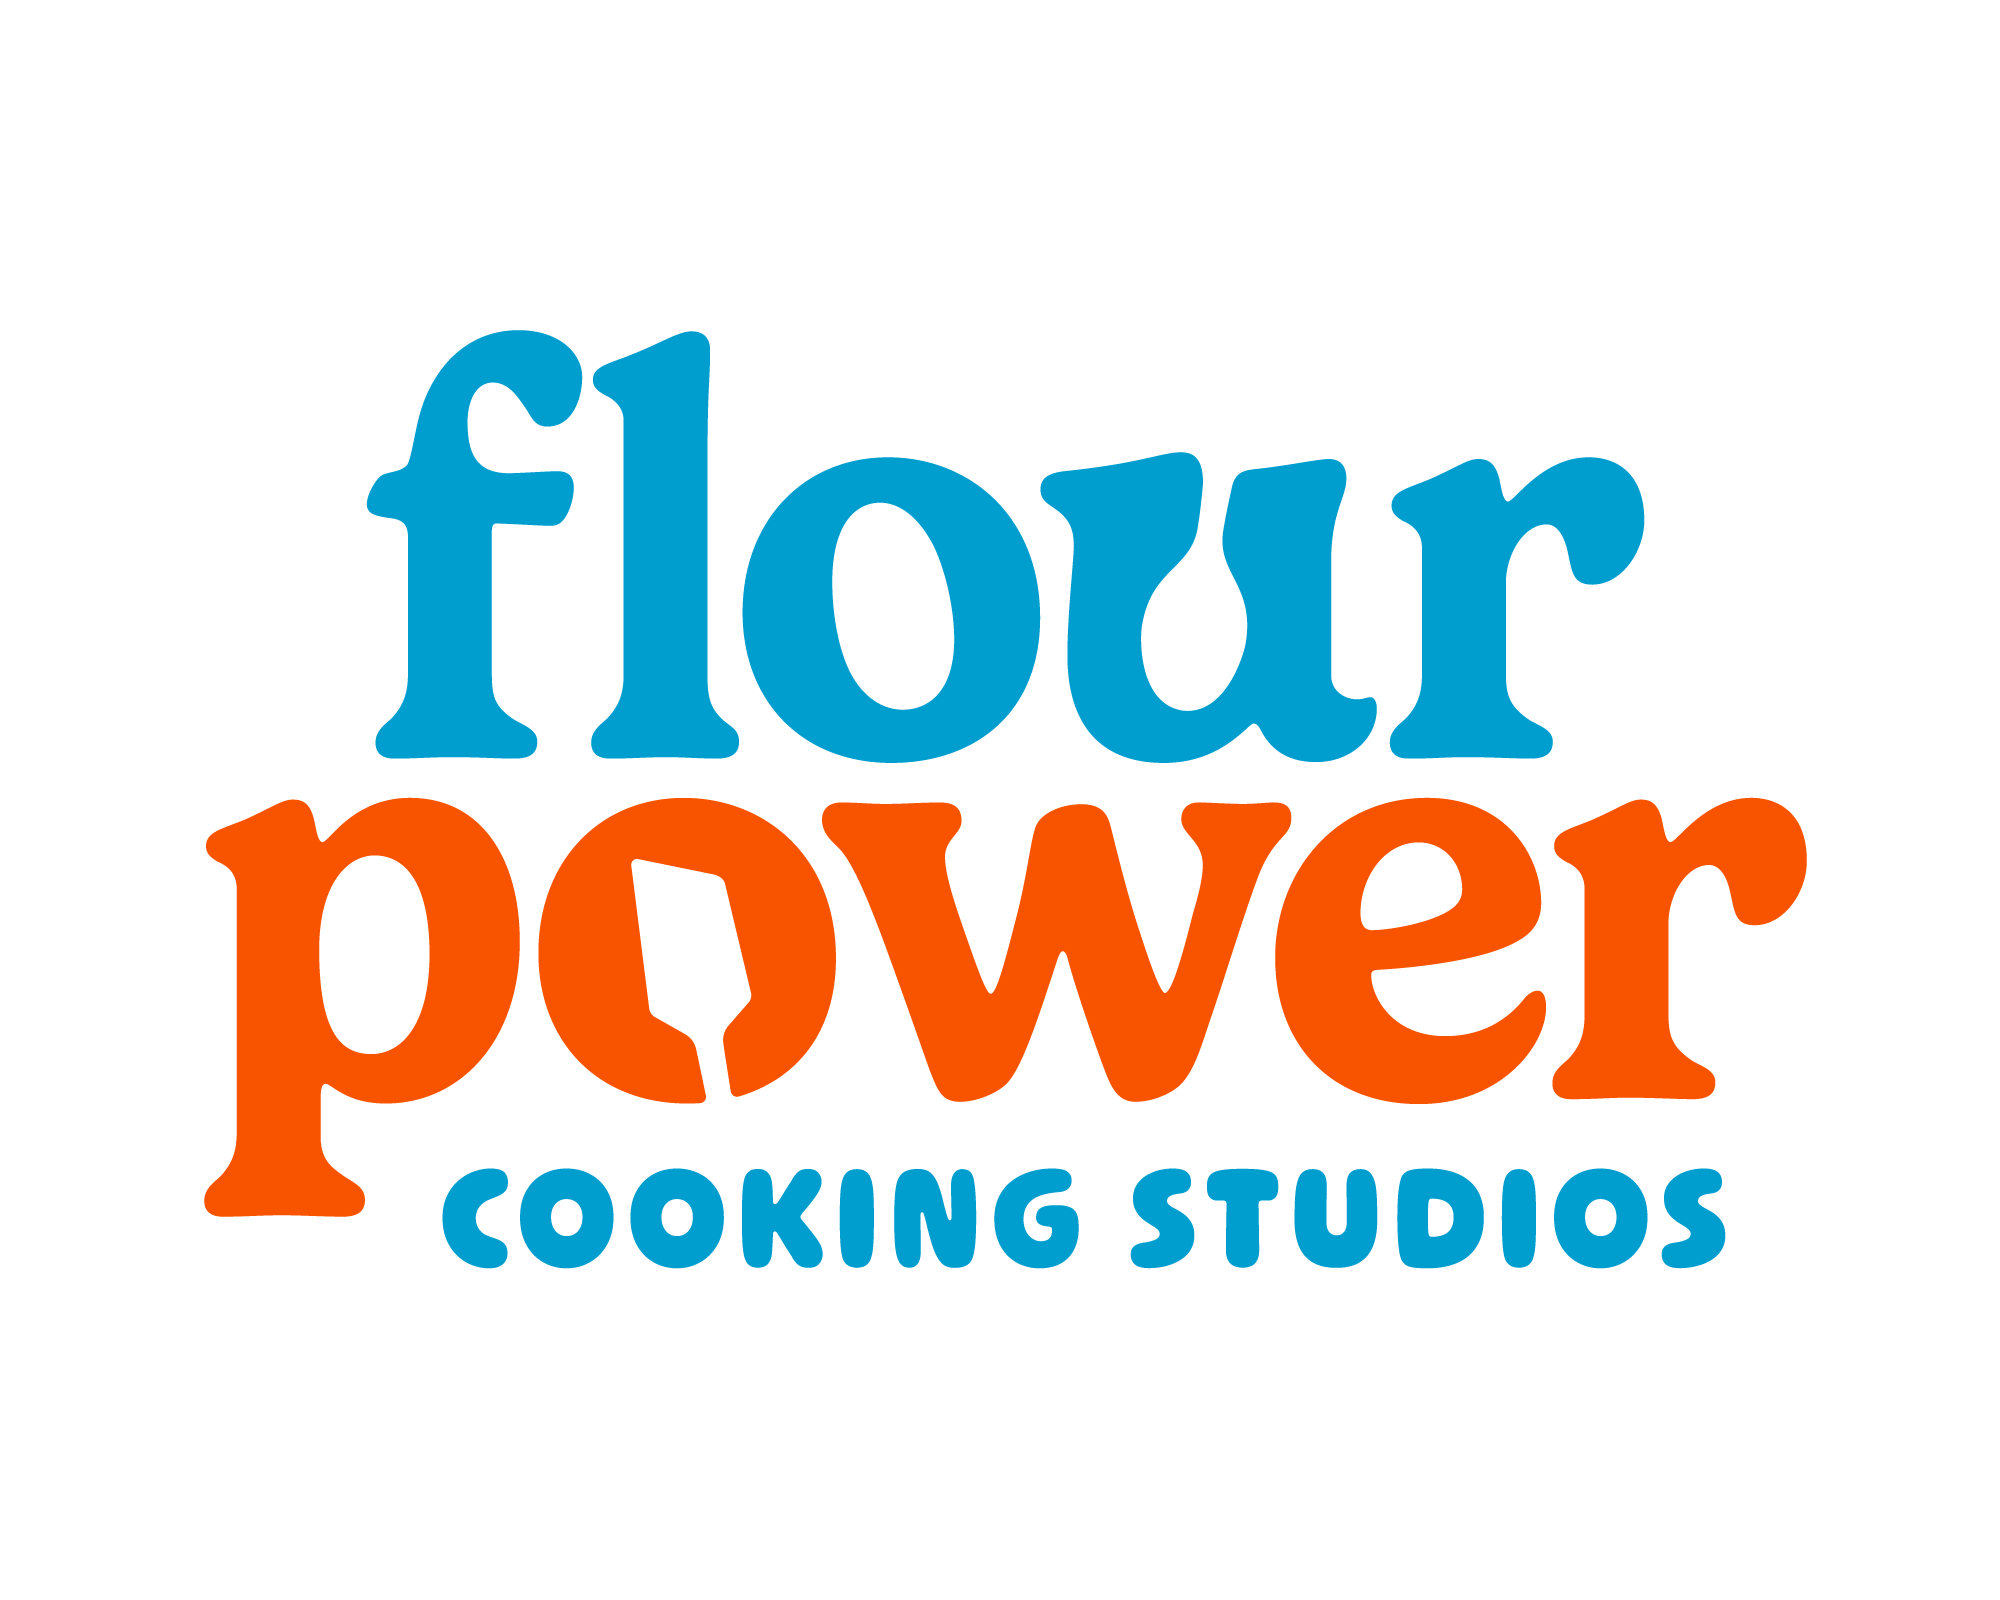 Flour Power Studios